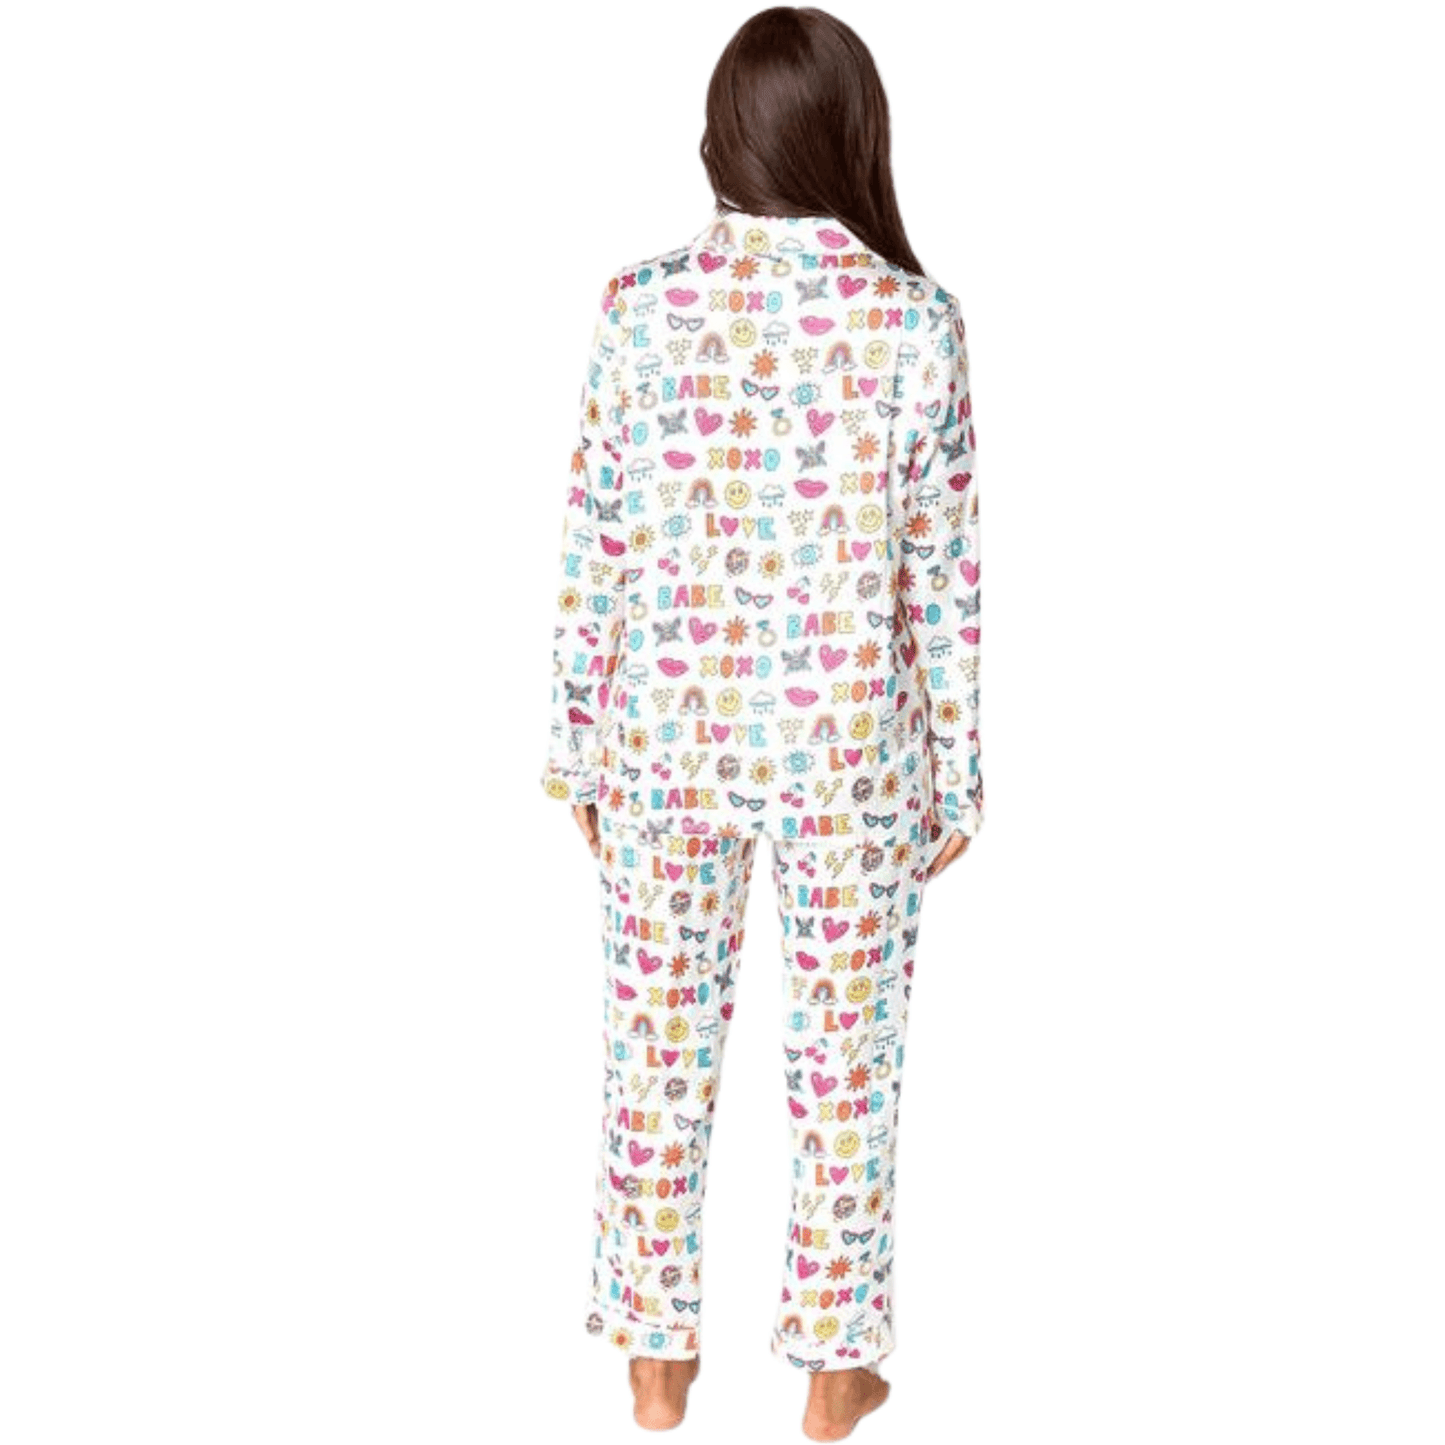 Penelope Doodles Pajamas - Fairley Fancy 